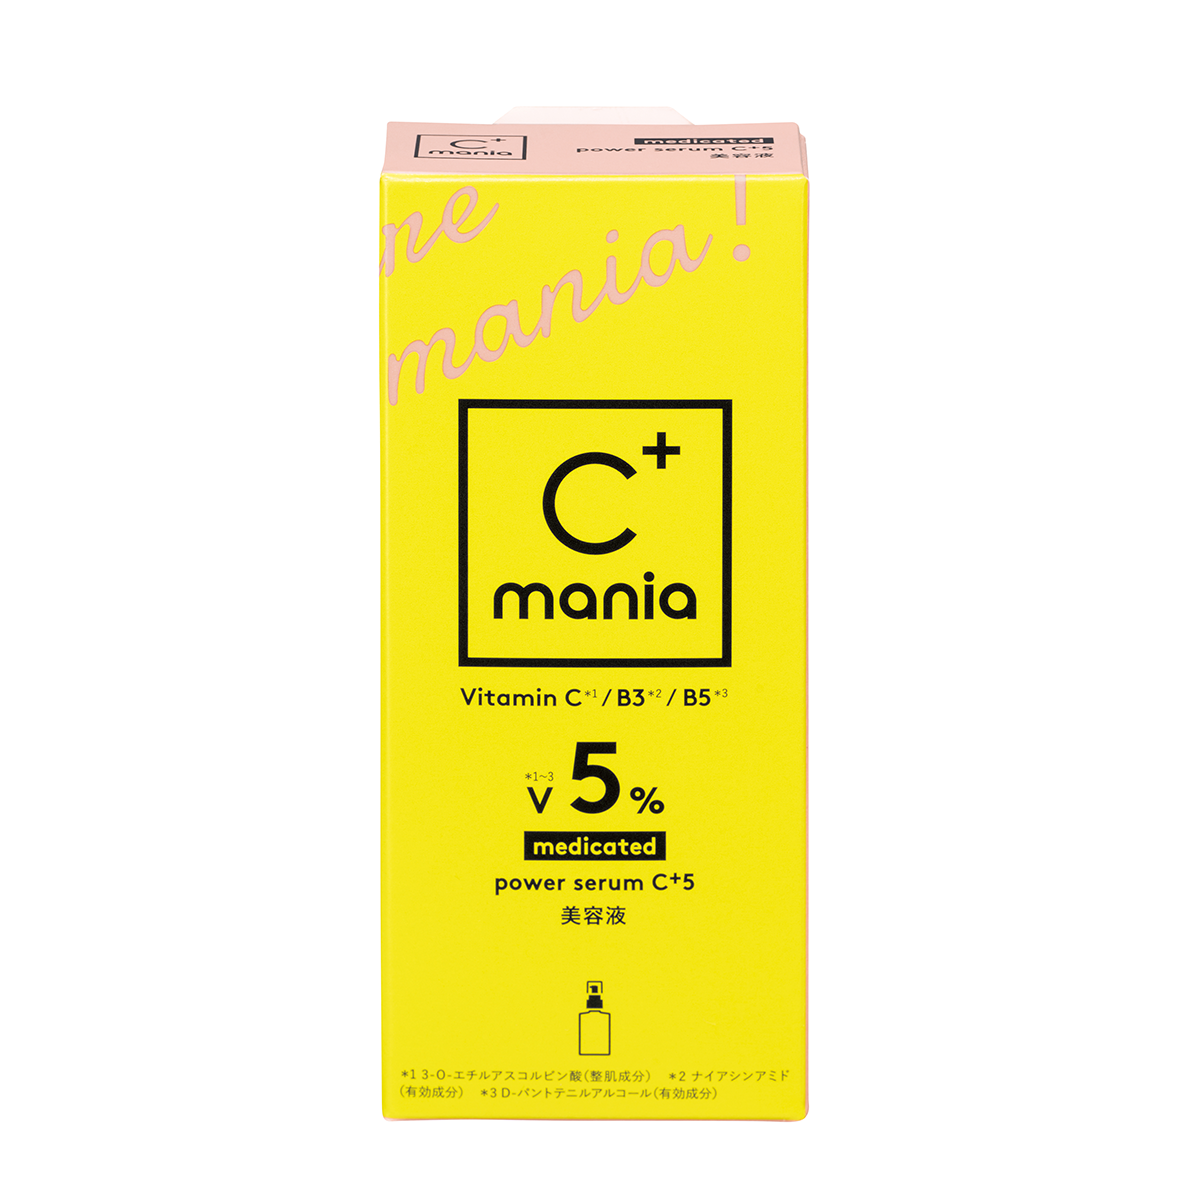 C+mania 薬用パワーセラムC+5 母の日 : cmania-powerserumc5 